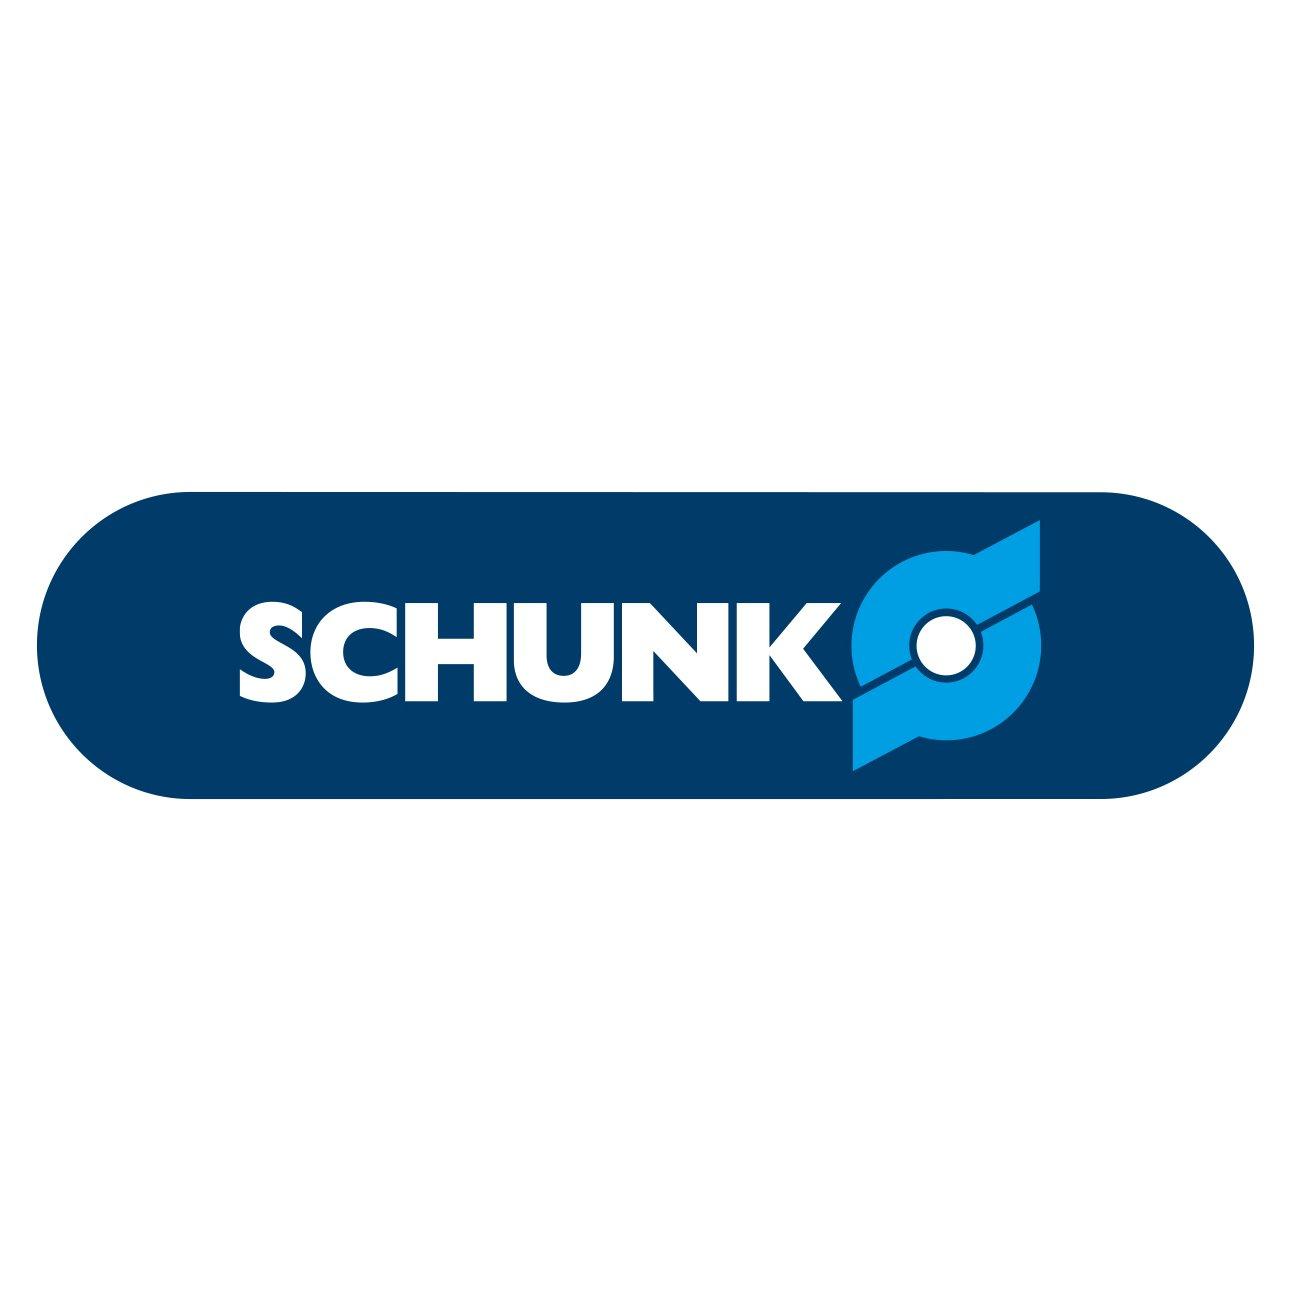 SCHUNK Intec GmbH